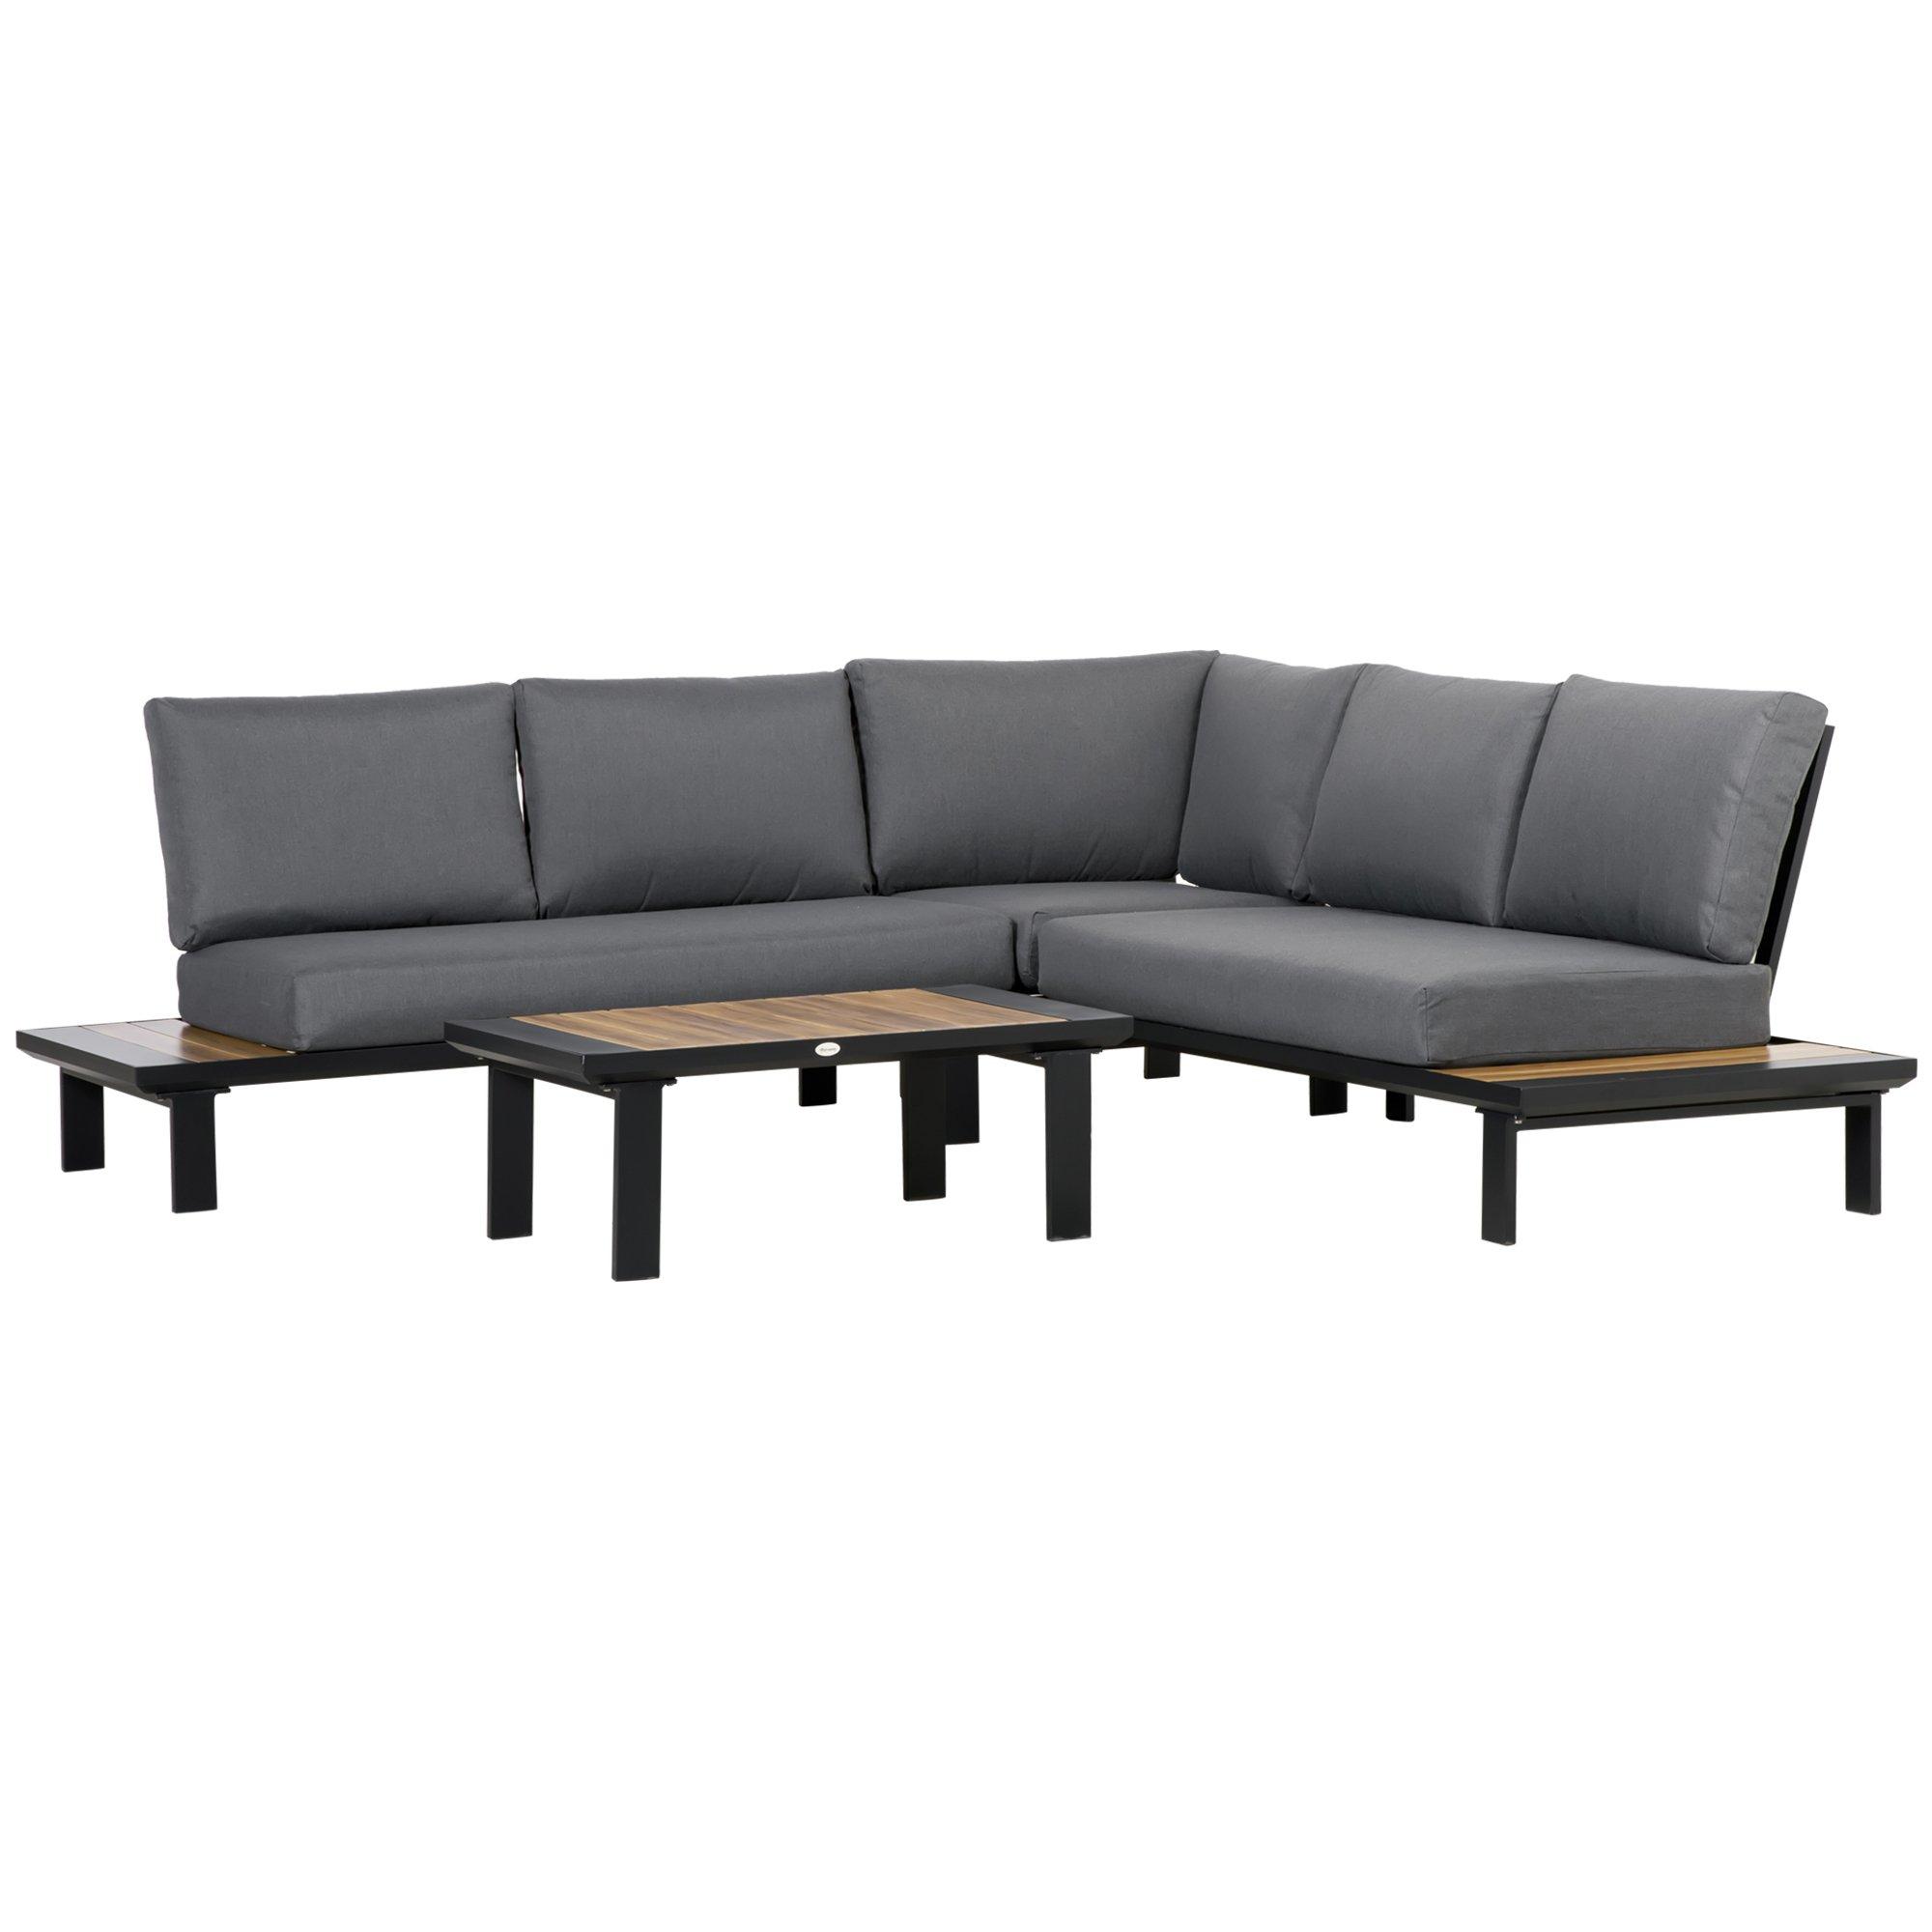 4 PCS Garden Furniture Conversation Set with Loveseat Table